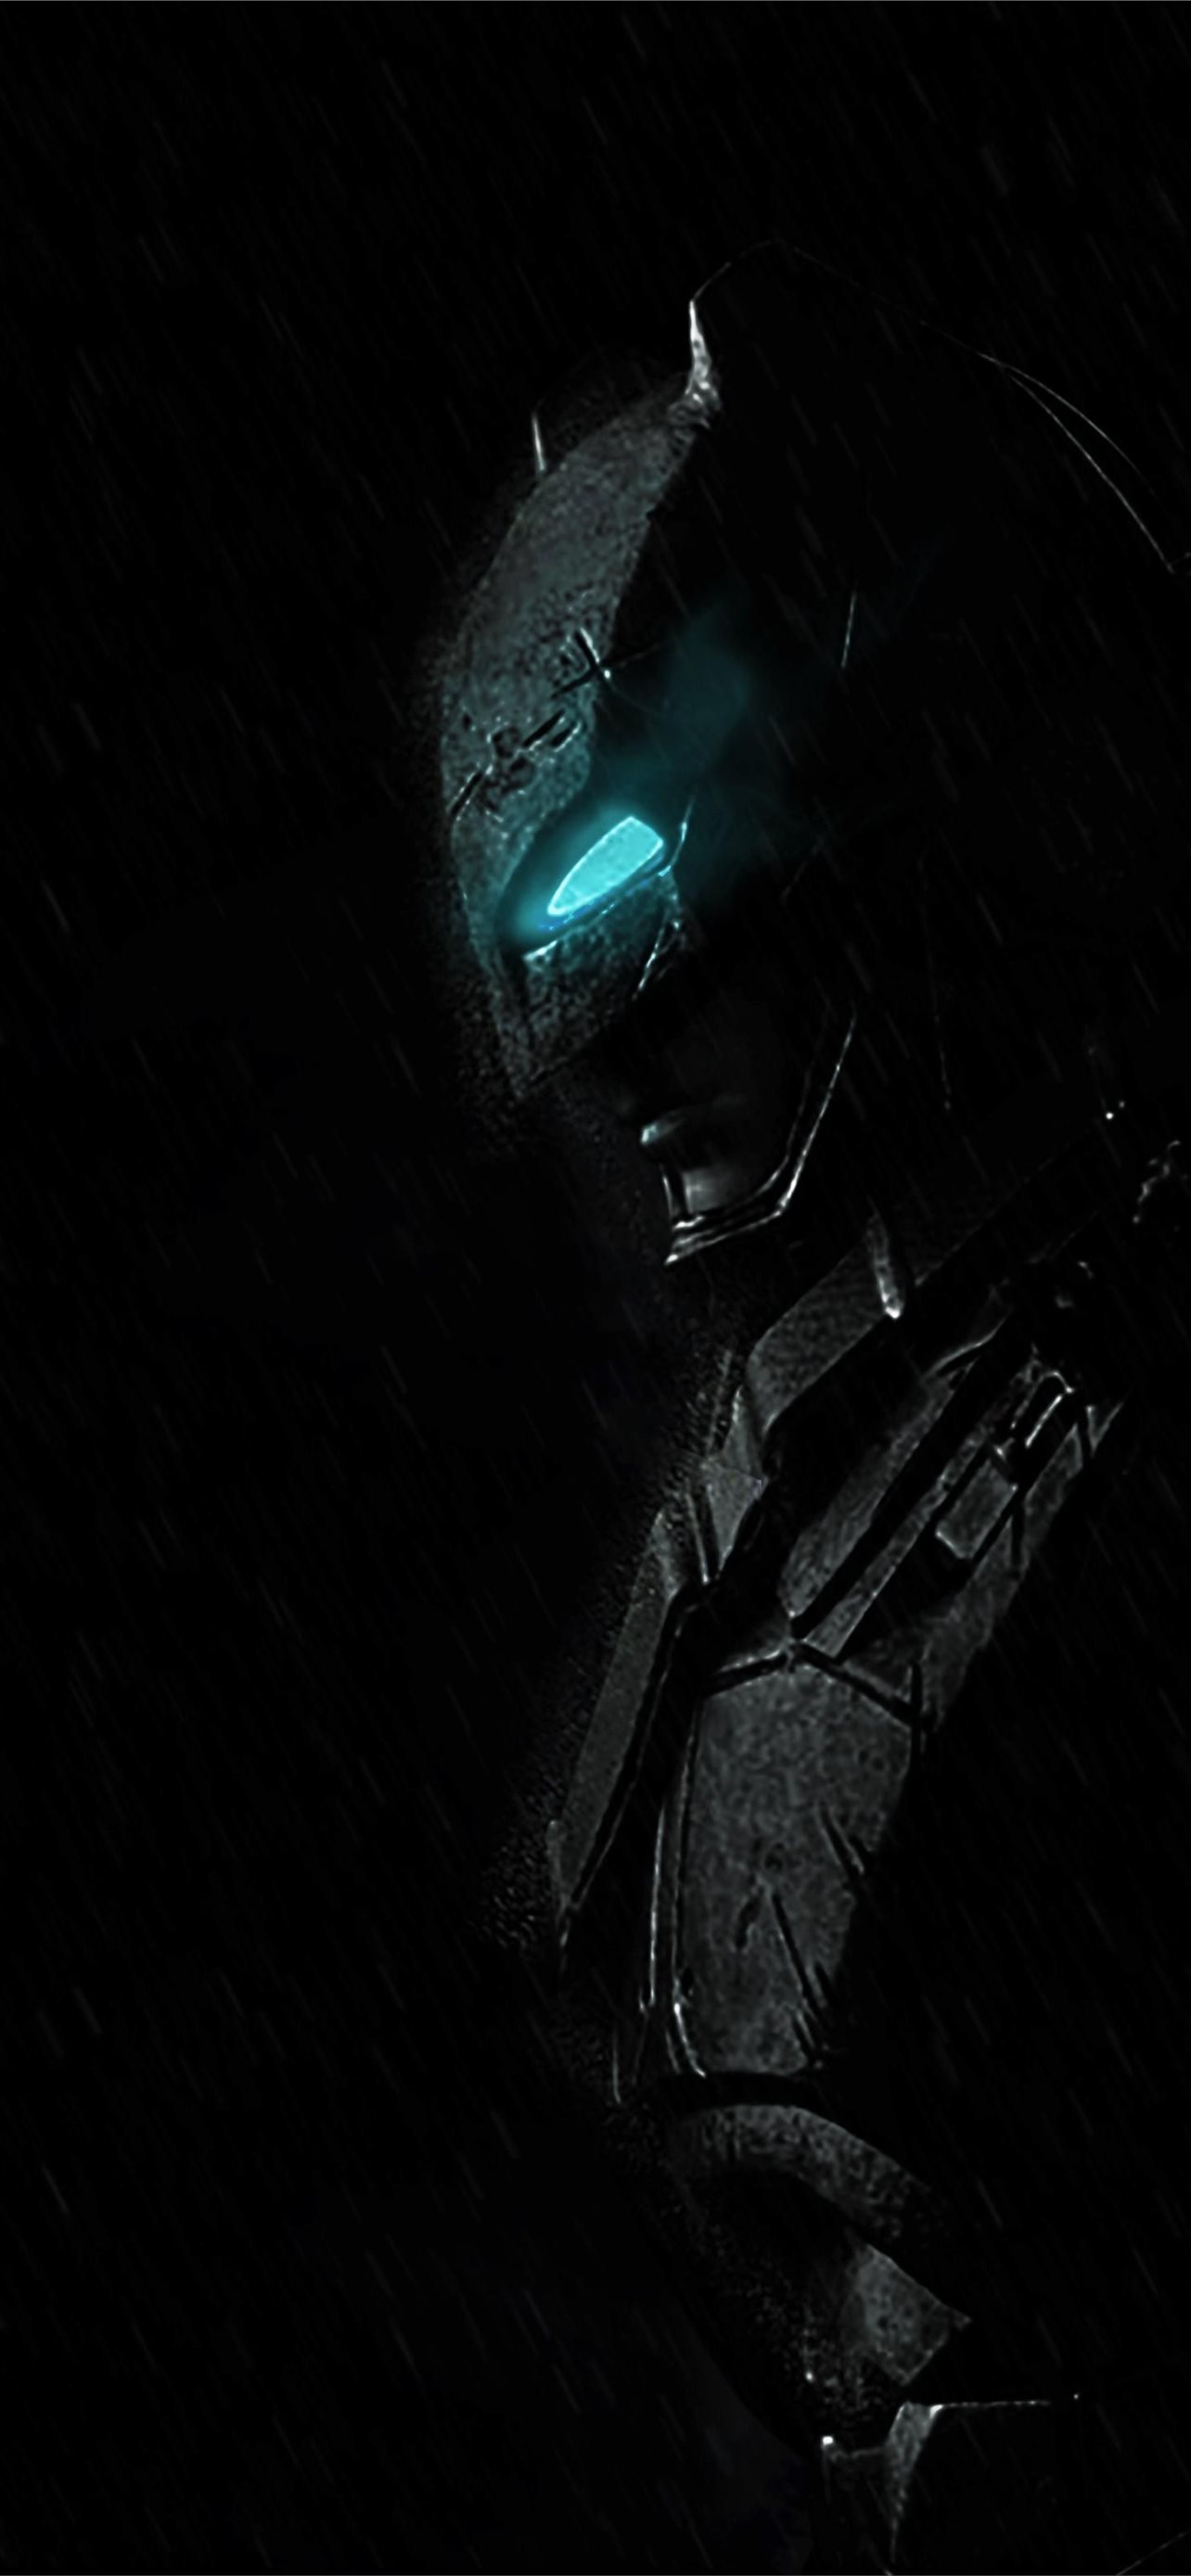 Desktop Wallpaper Batman Ben Affleck Justice League 5k Hd Image  Picture Background 52b849